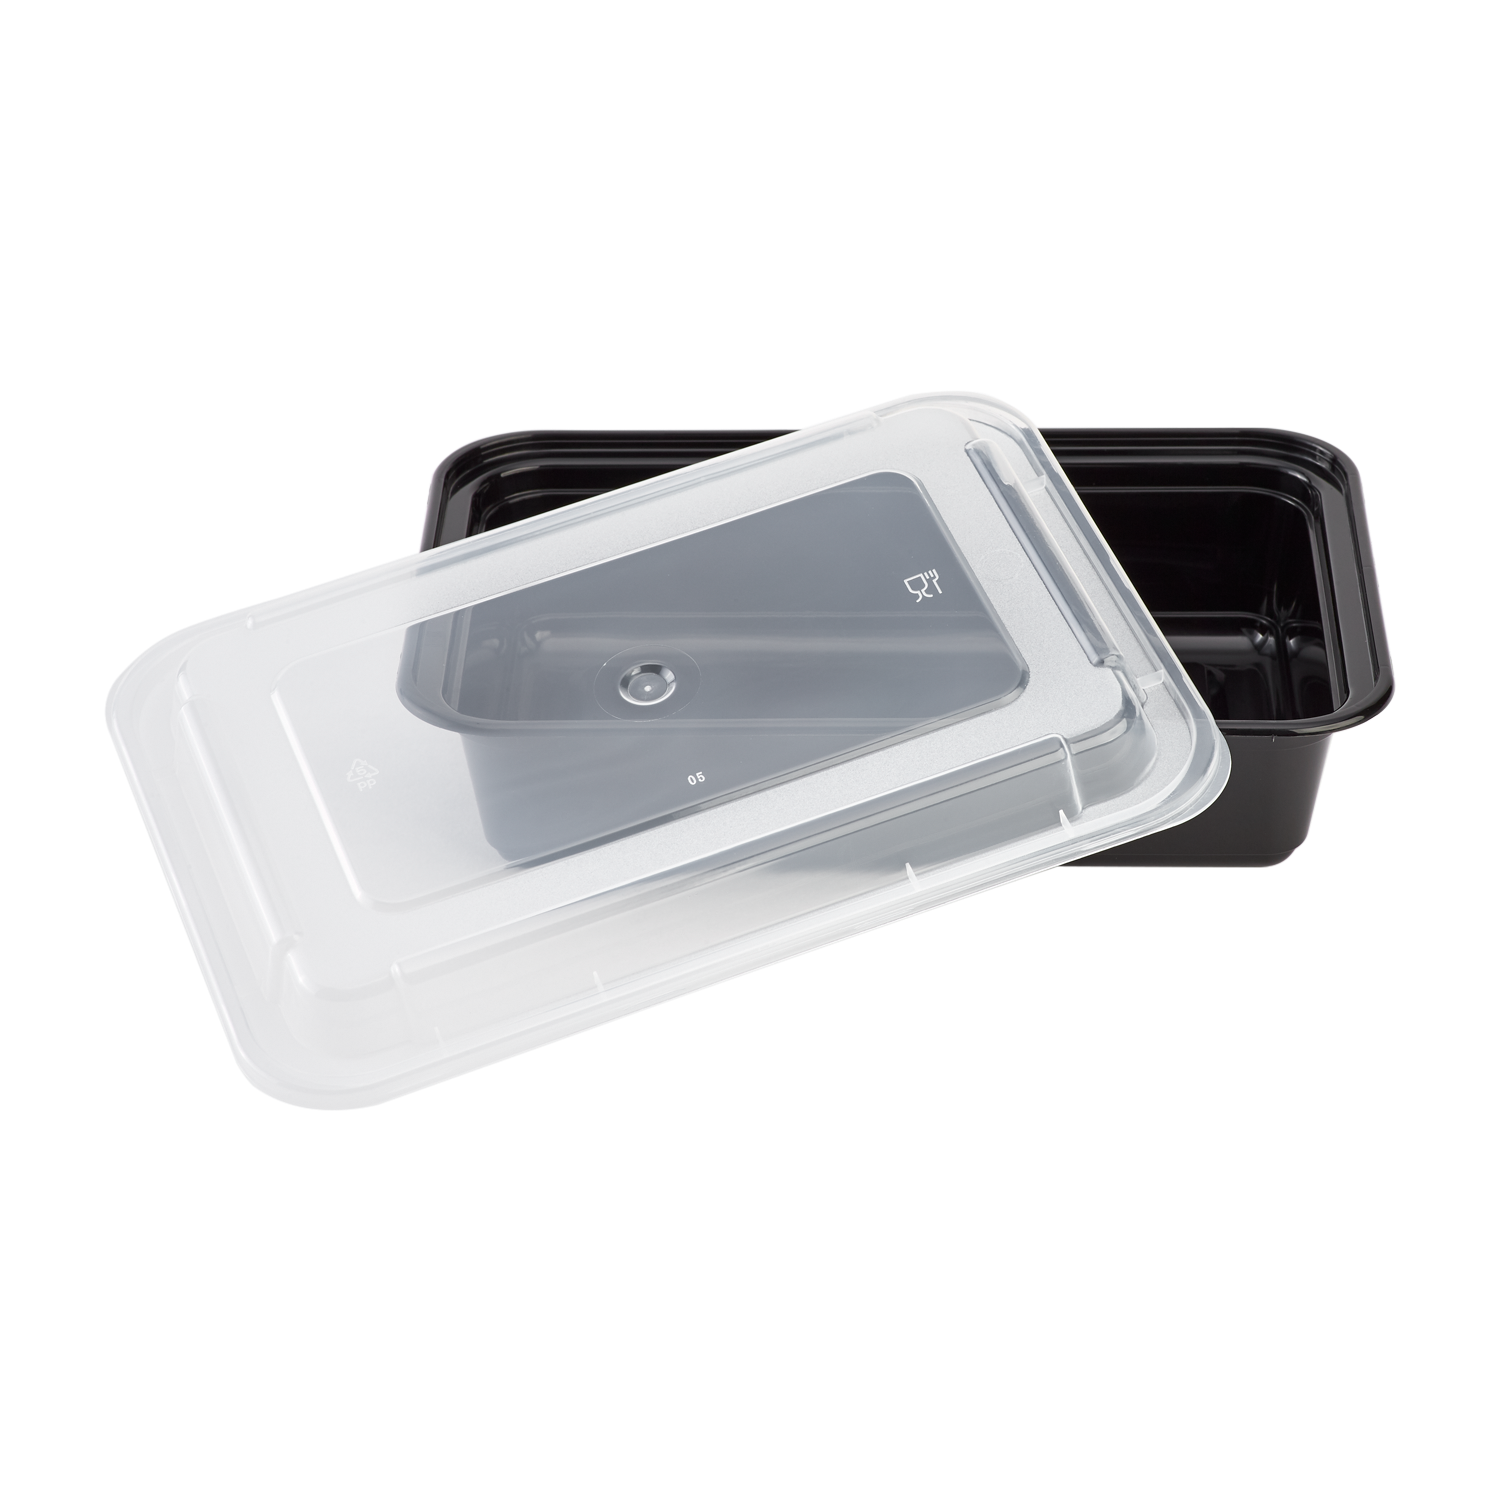 Karat 24 oz PP Plastic Microwavable Rectangular Food Containers & Lids, Black - 150 Sets